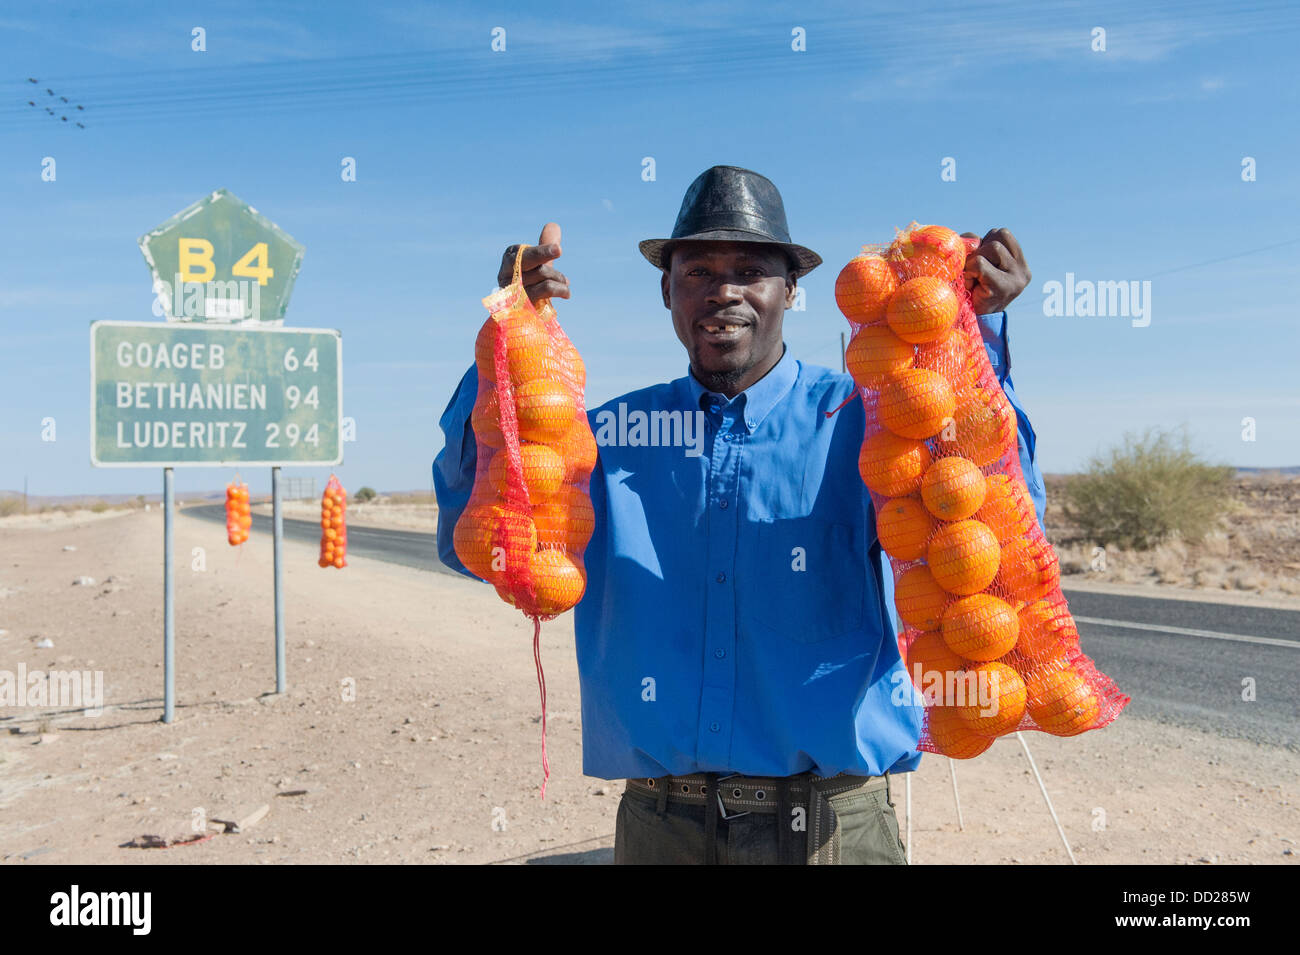 namibian-man-selling-oranges-along-the-road-in-schwazland-namibia-DD285W.jpg